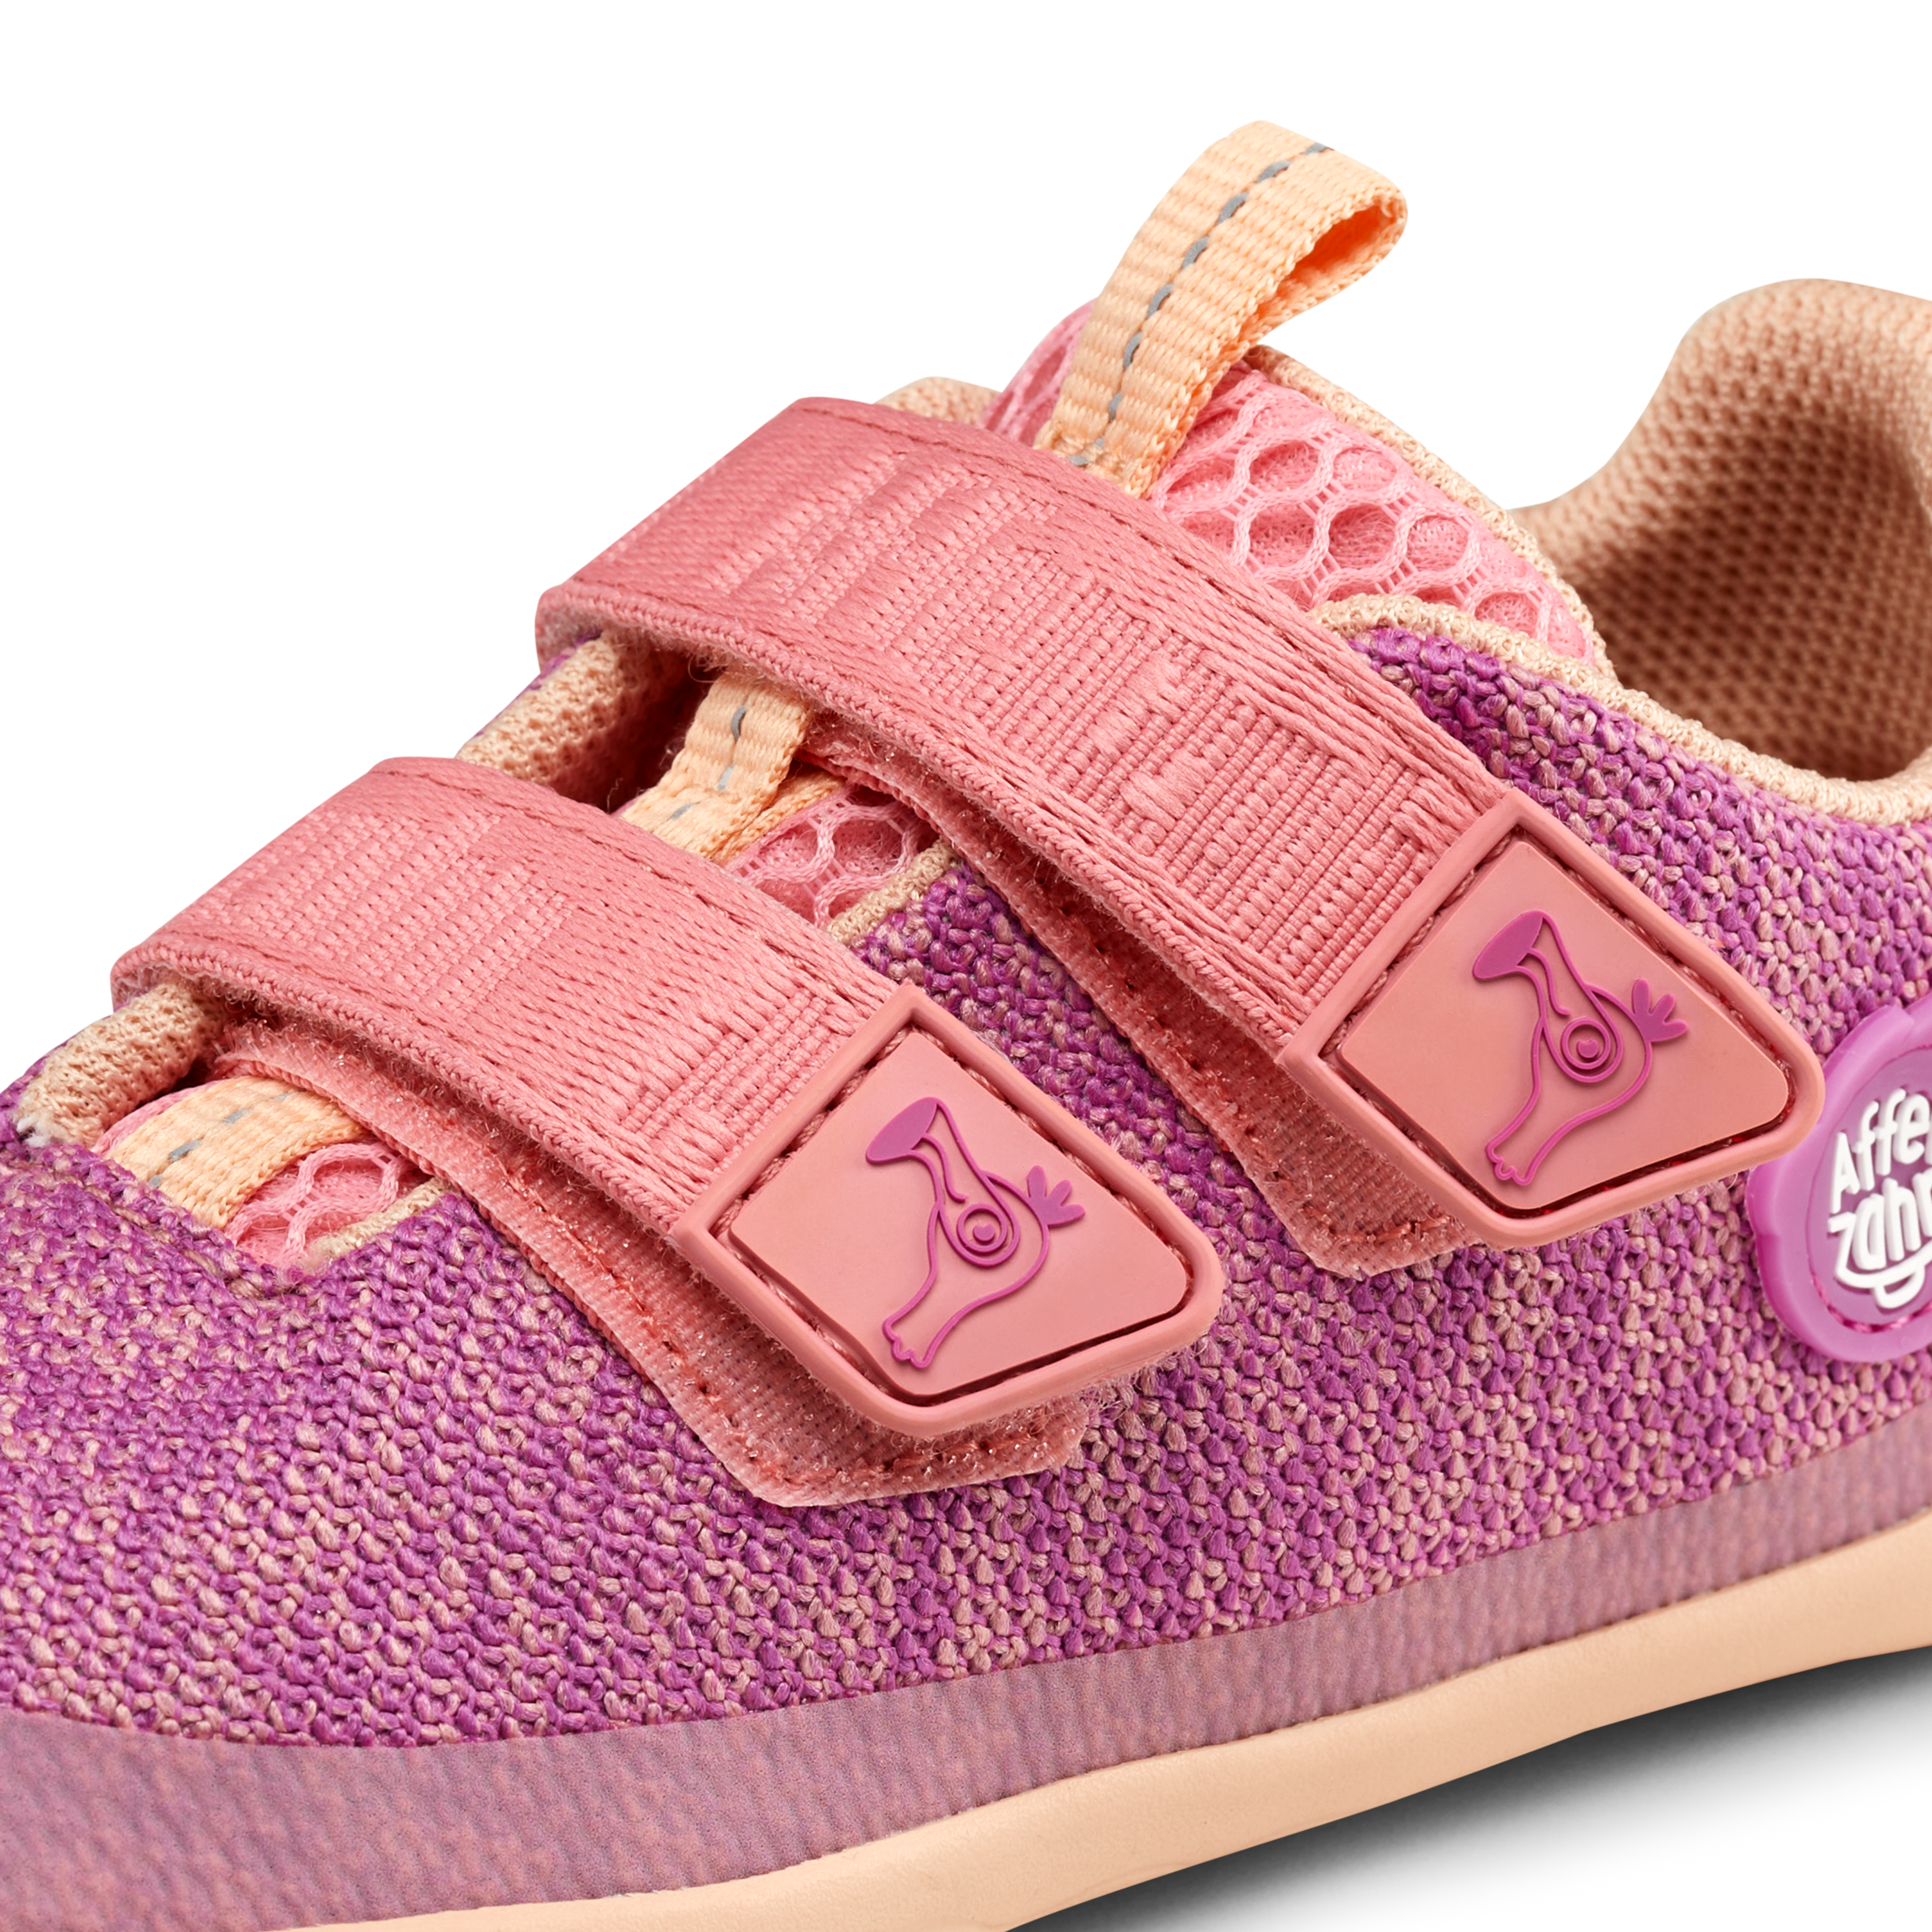 Affenzahn Knit Happy barfods sneakers til børn i farven flamingo, detalje